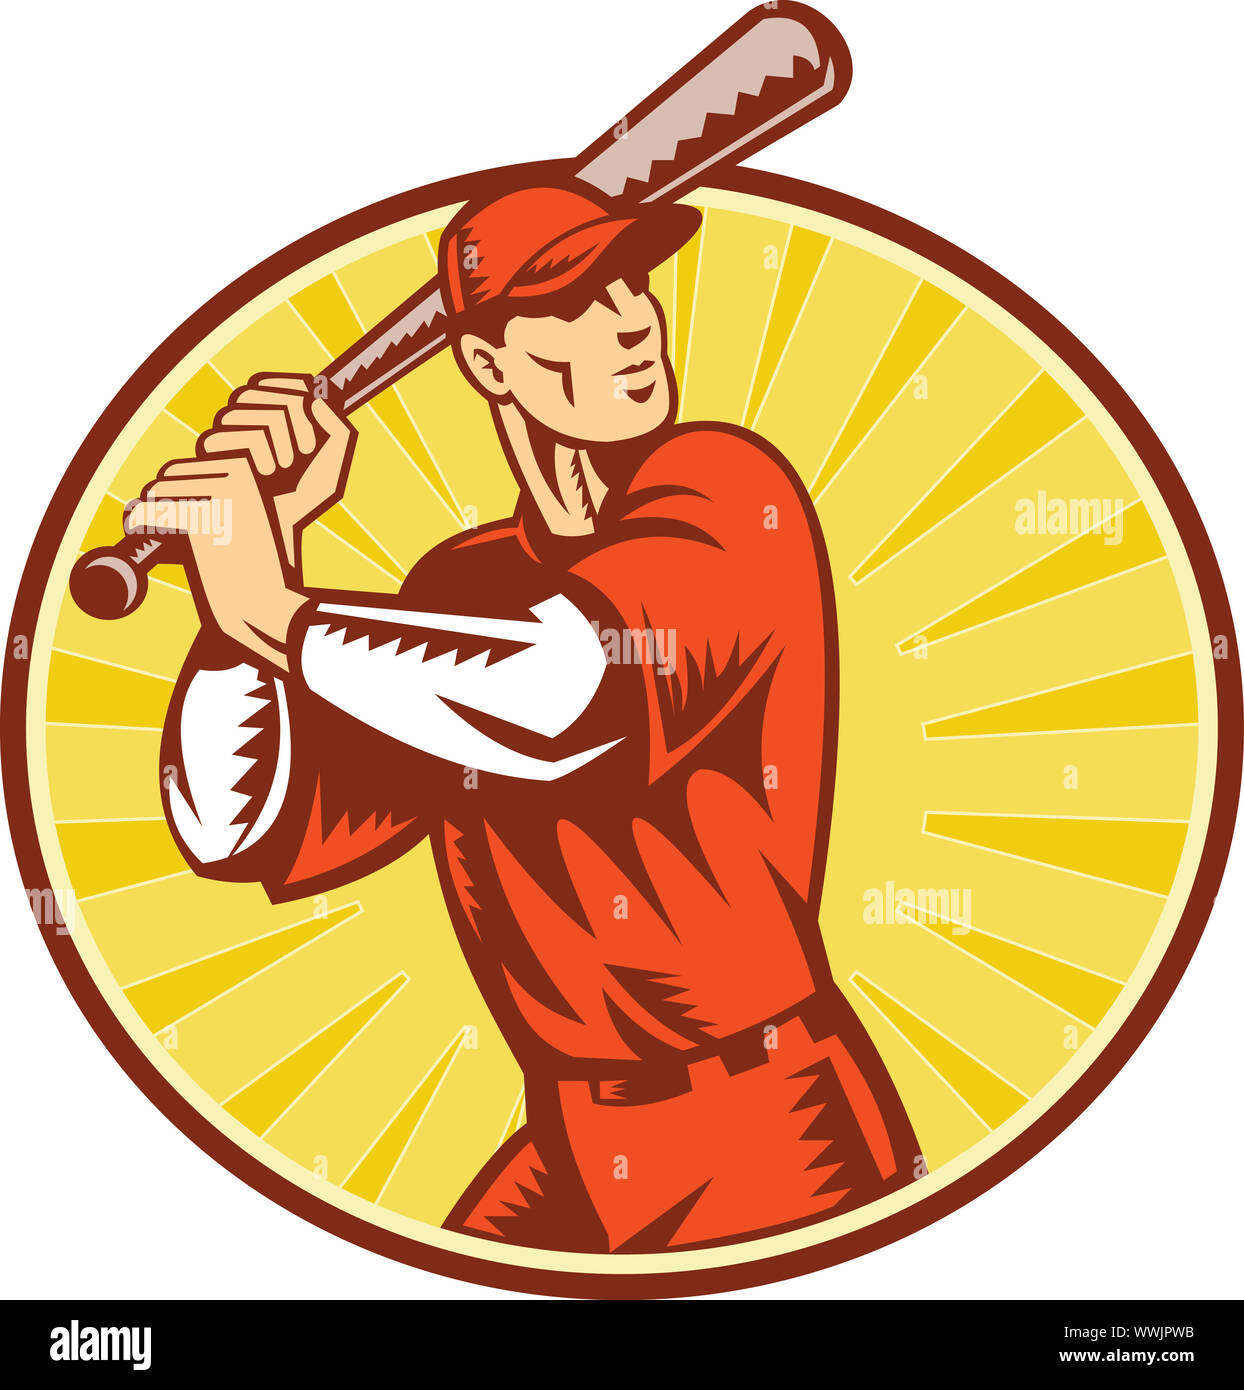 Baseball Player Batting Circle Side Cartoon, Stock vector